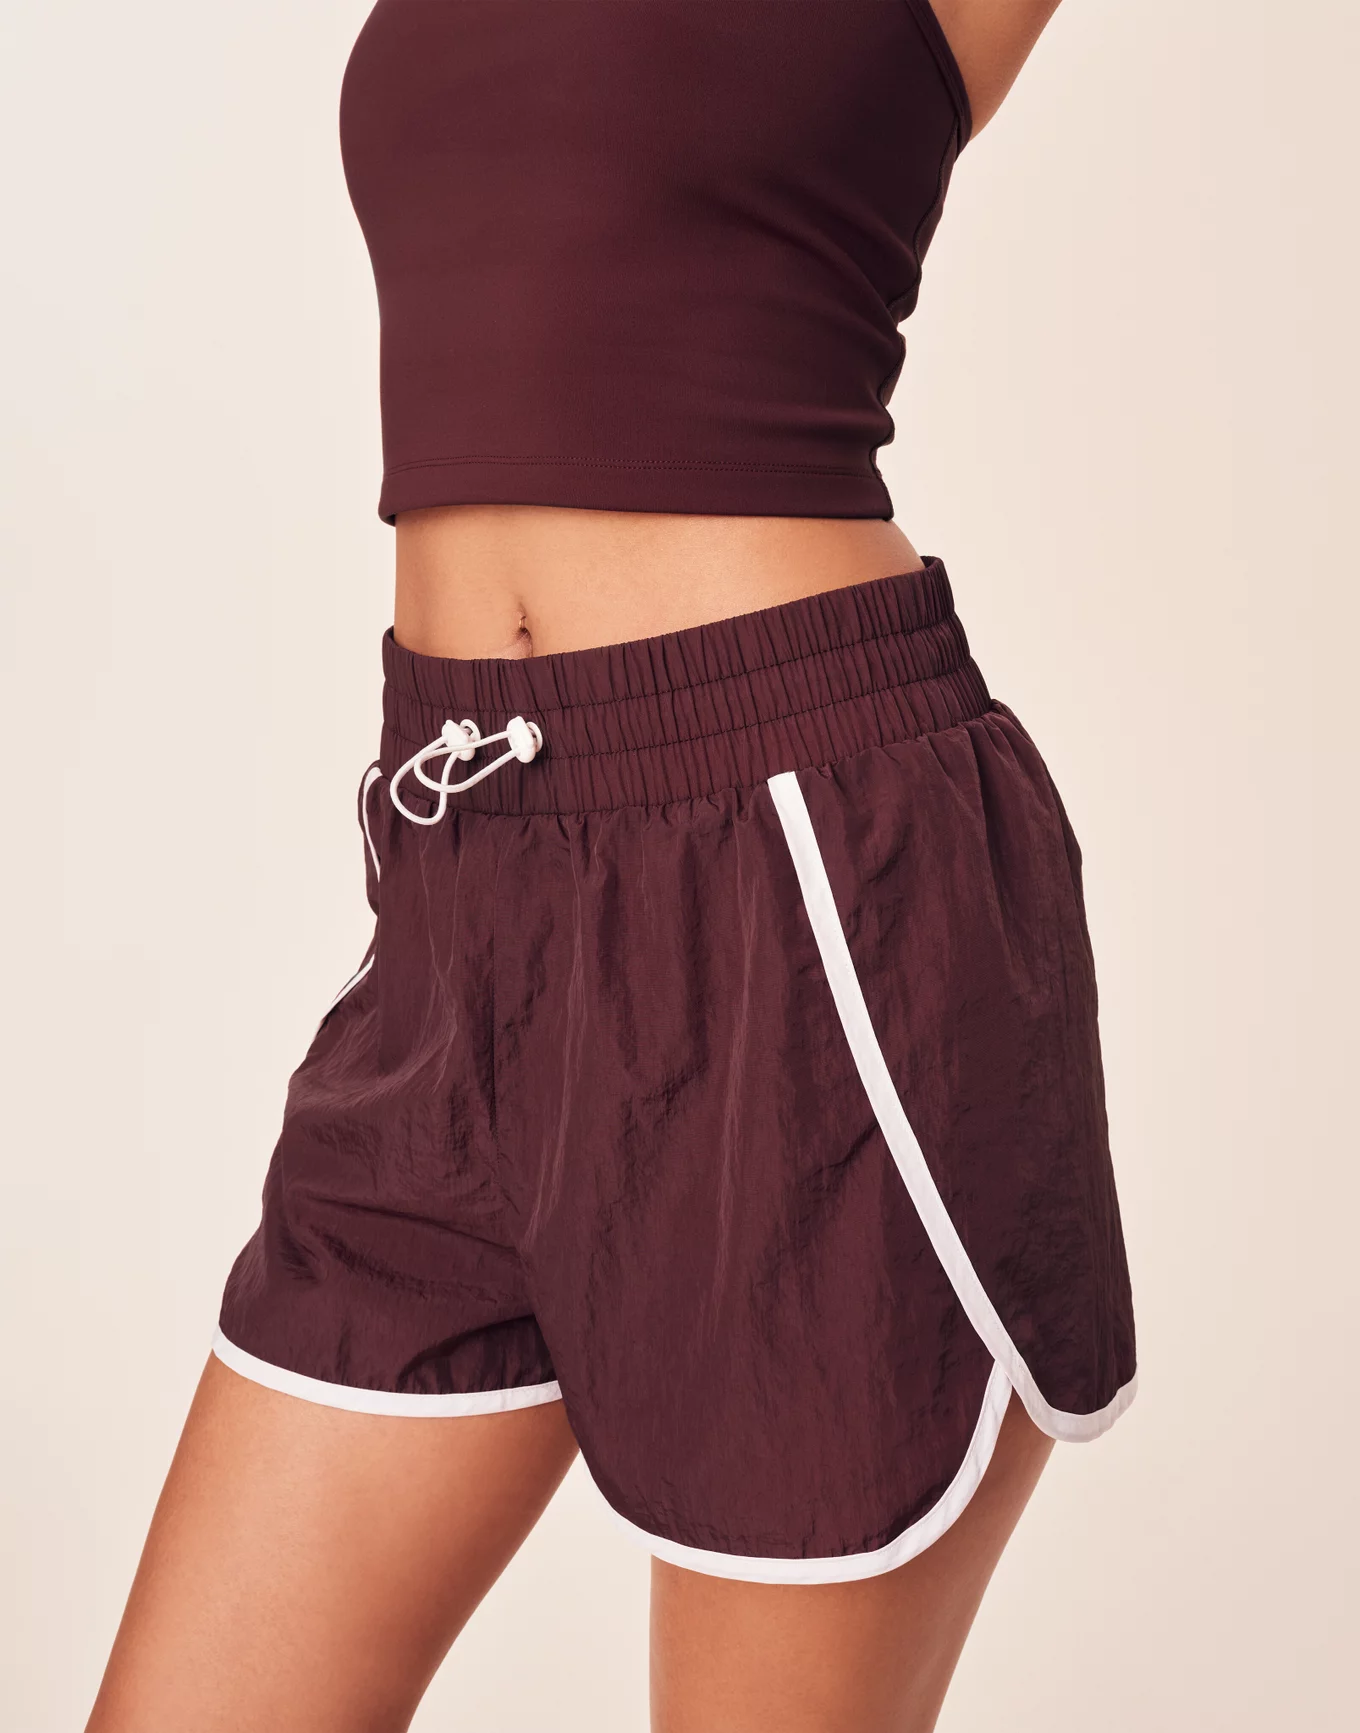 Sia Short Dark Brown Active Shorts, XS-XL